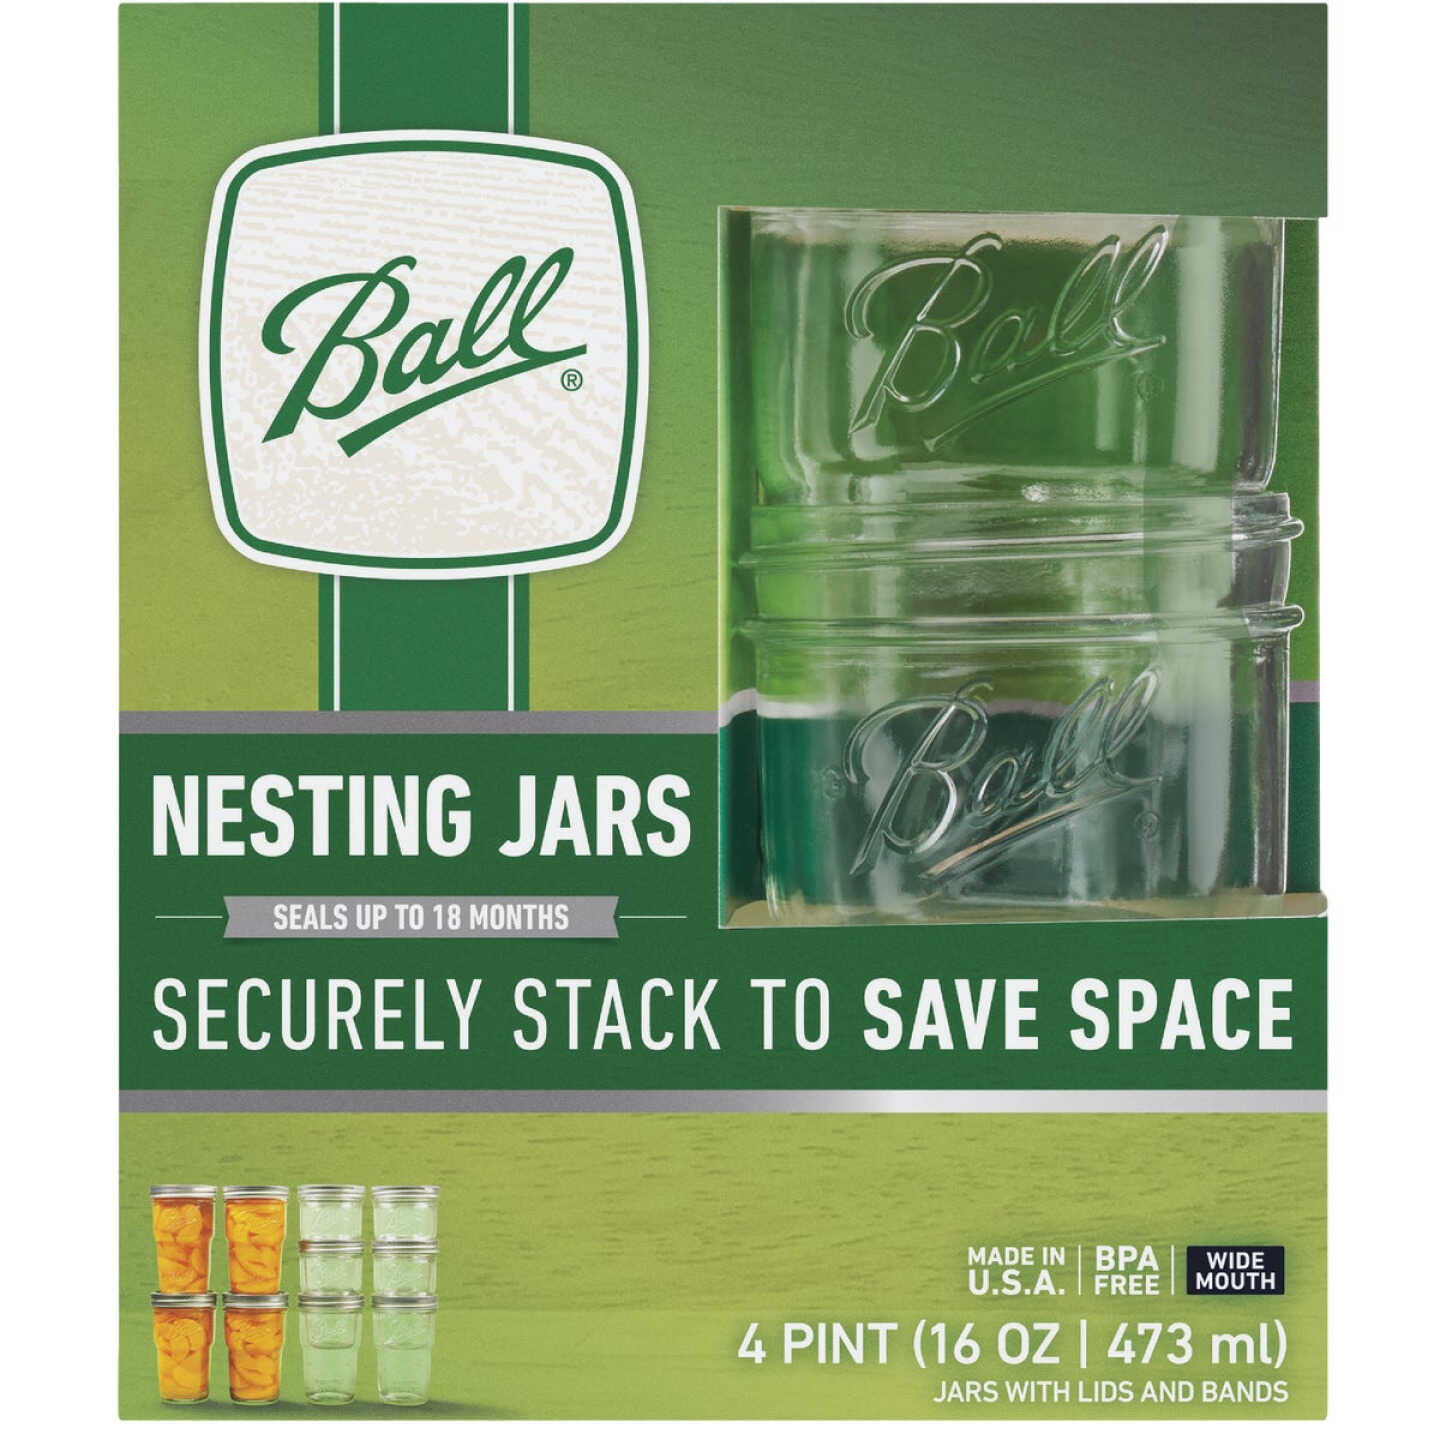 16 oz Pint Wide Mouth Nesting Jars - 4 pk by Ball at Fleet Farm